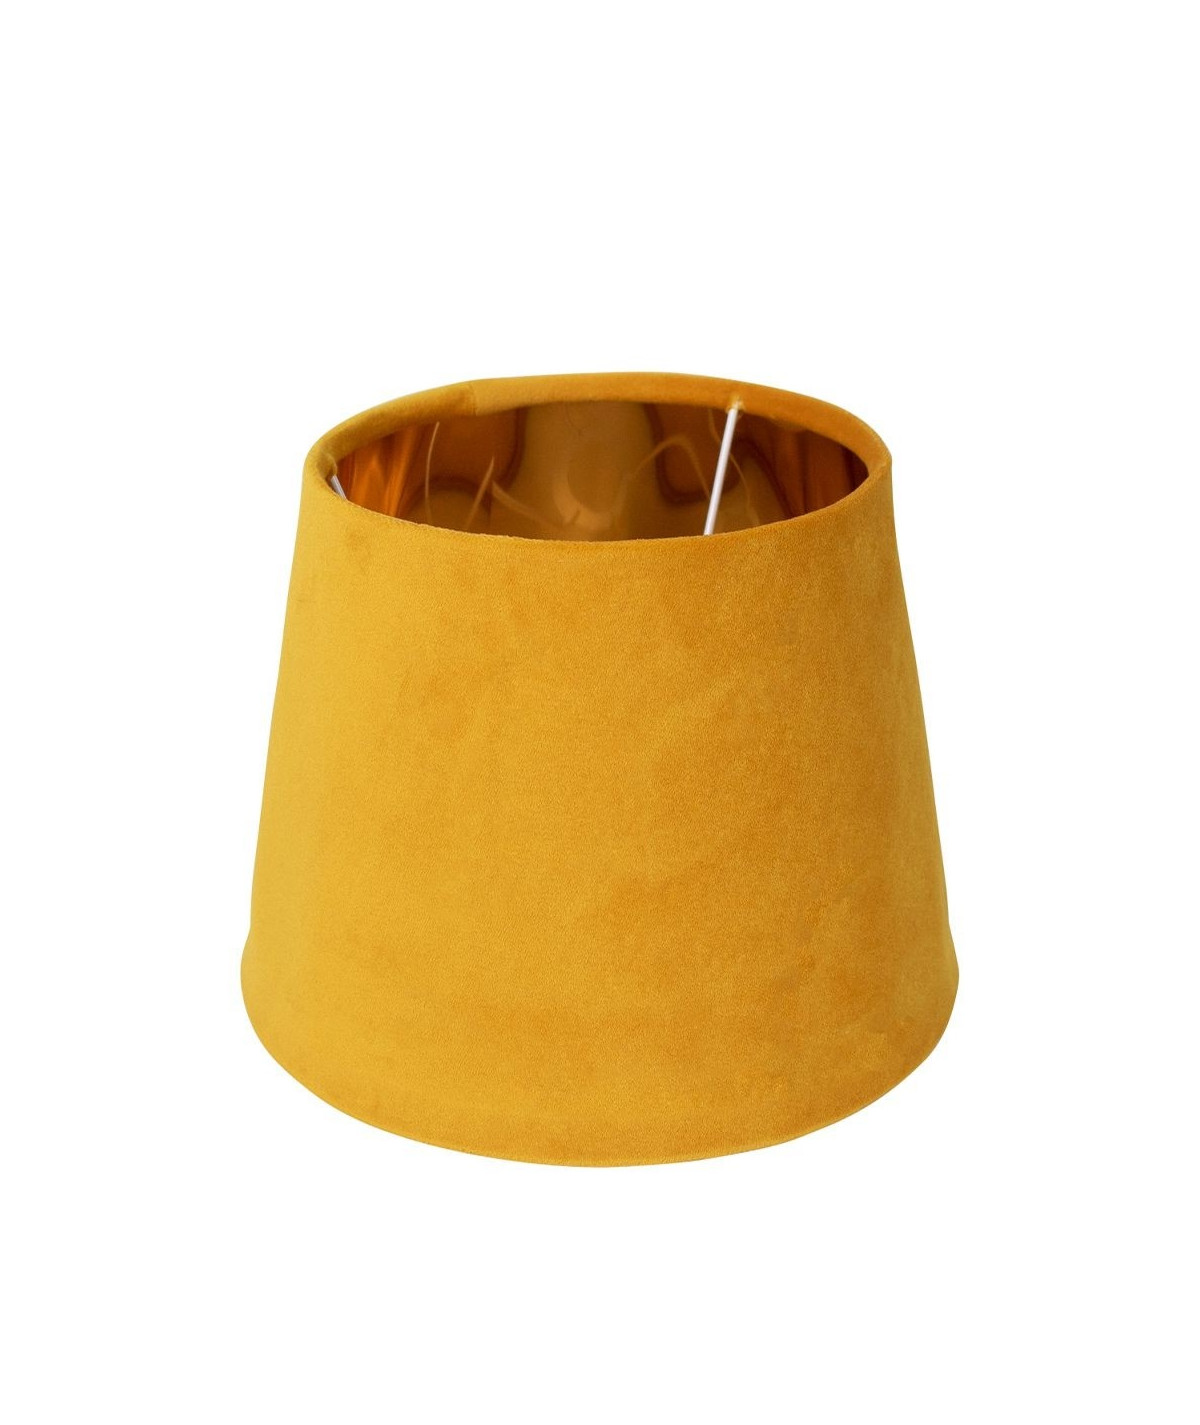 Abat jour en velours conique diam30cm jaune - Joy |YESDEKO